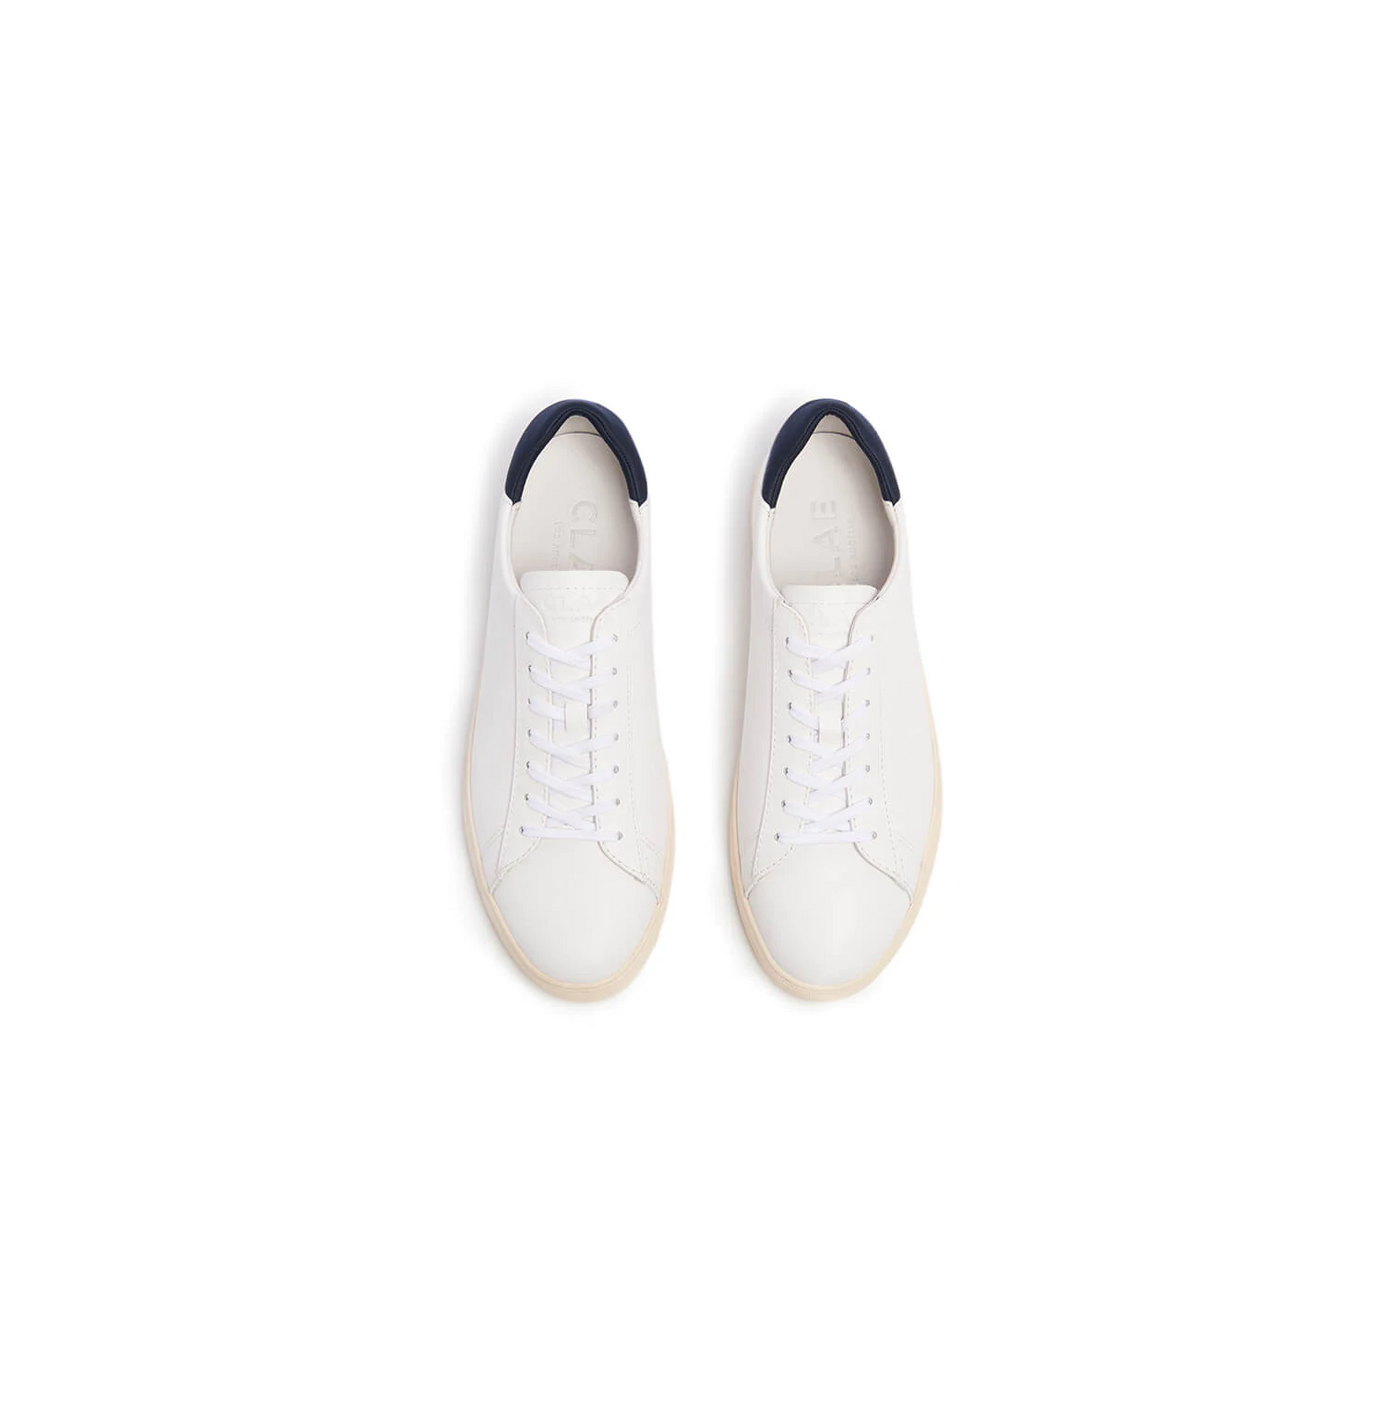 Clae - Bradley Sneaker - White Leather Navy